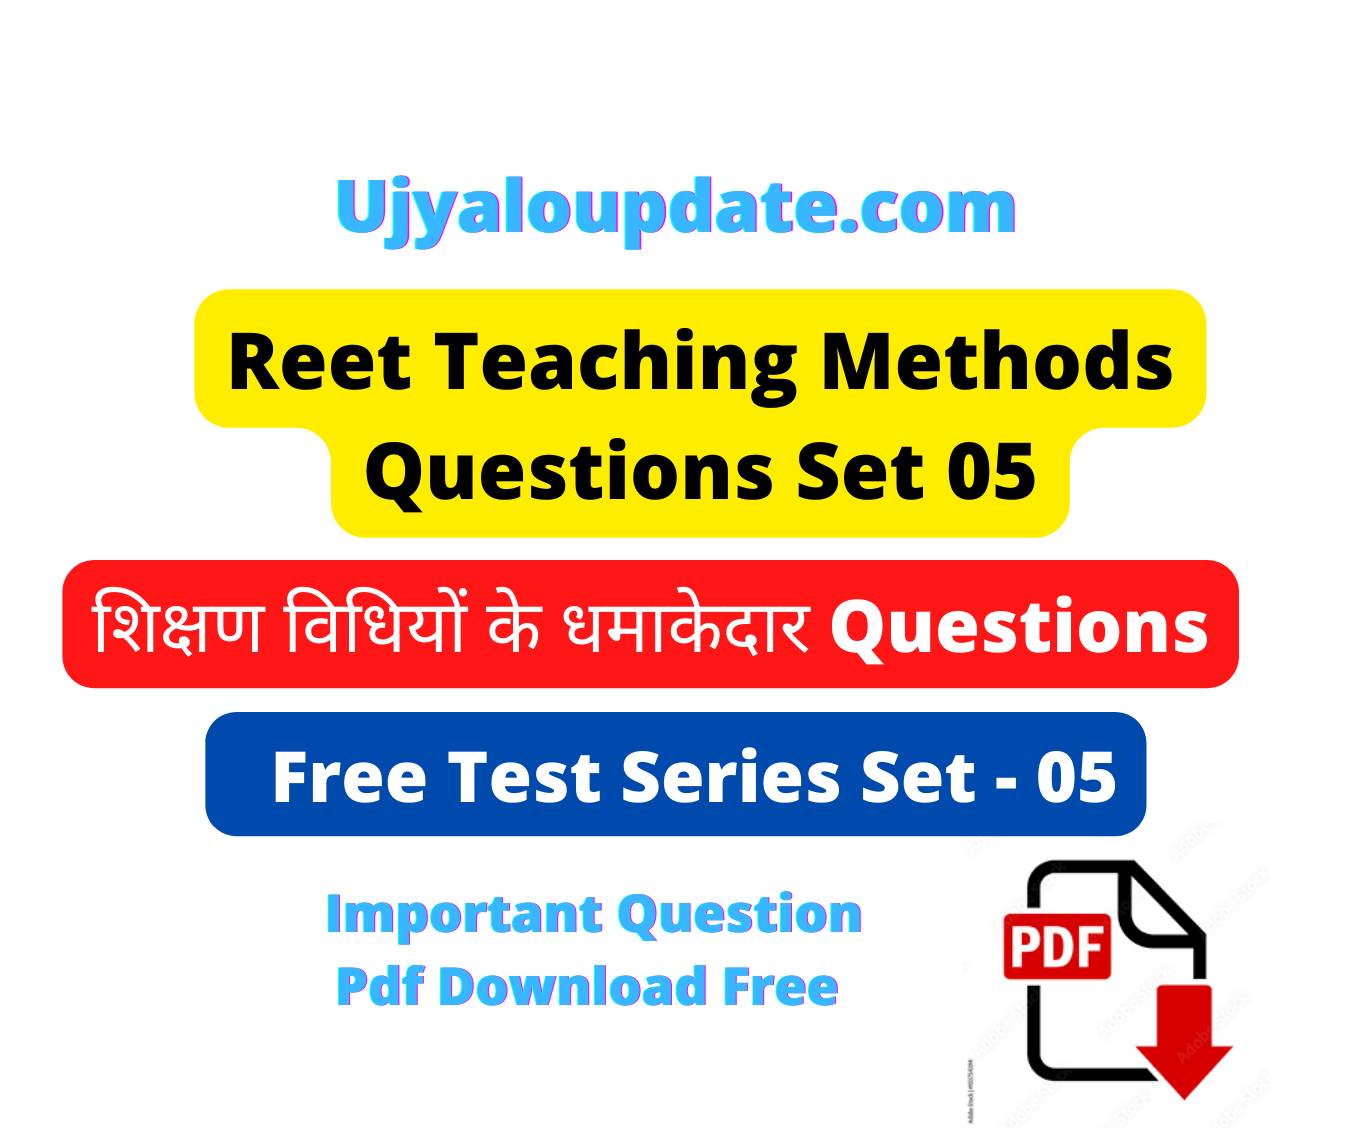 Reet Teaching Methods Ques